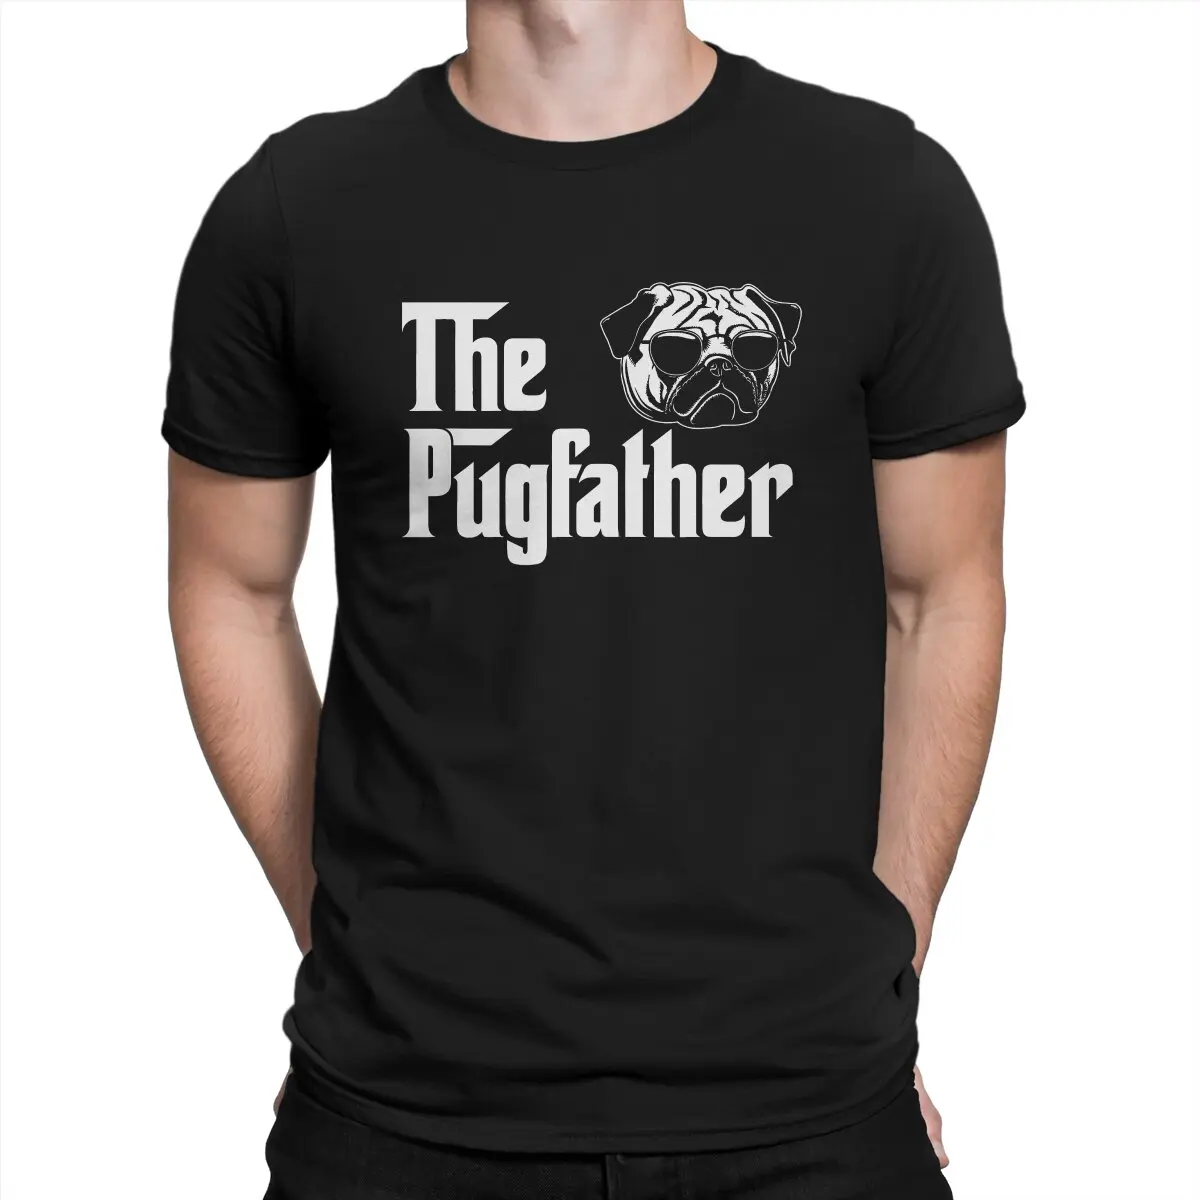 

Capt Blackbone the Pugrate Man TShirt The Pugfather Distinctive T Shirt Original Streetwear New Trend